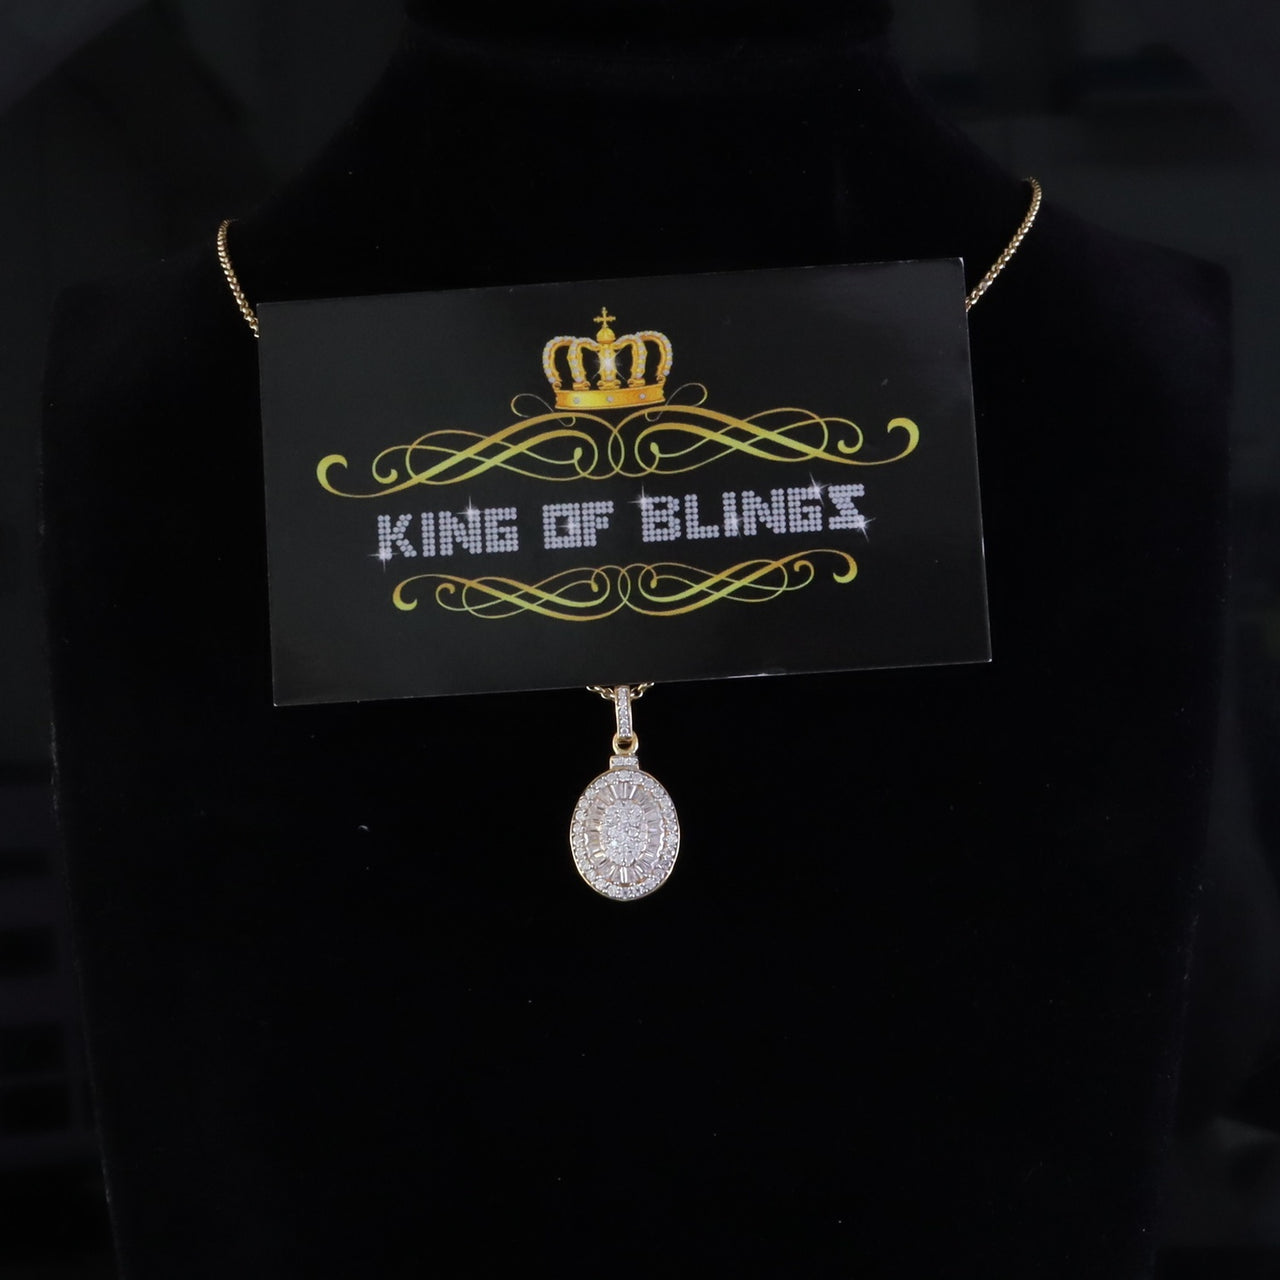 King Of Bling's 925 Sterling Yellow Silver 1.00ct VVS D CLr. Moissanite Oval Pendant for Womens KING OF BLINGS